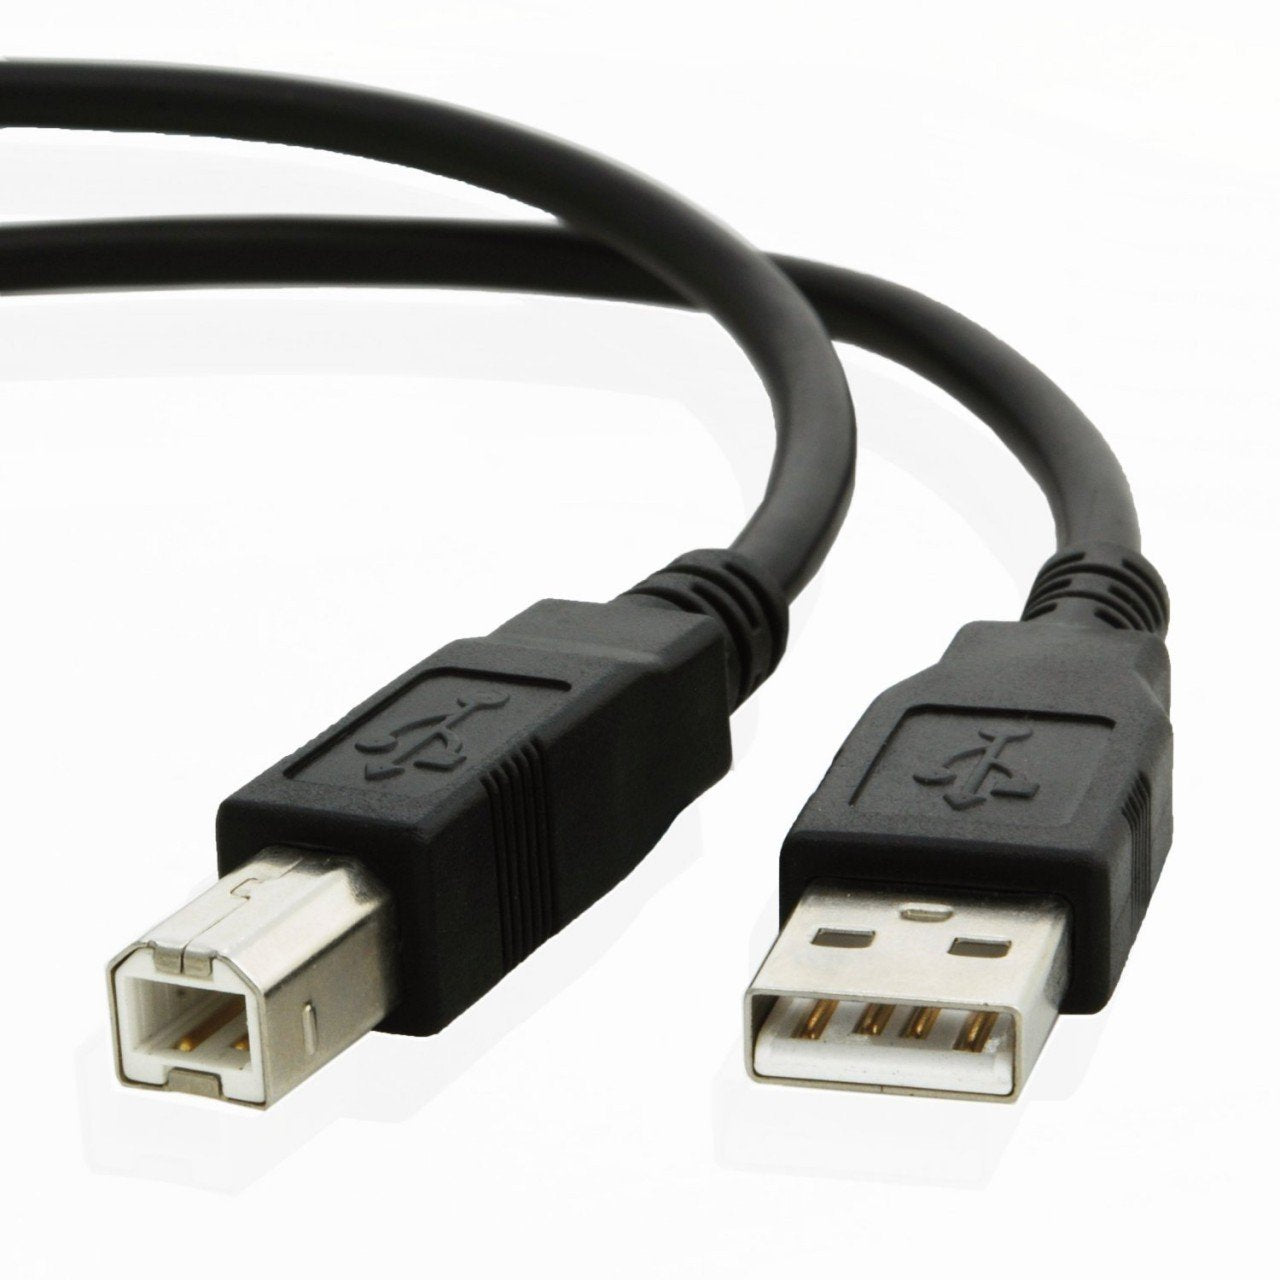 USB cable for Canon PIXMA PRO-1